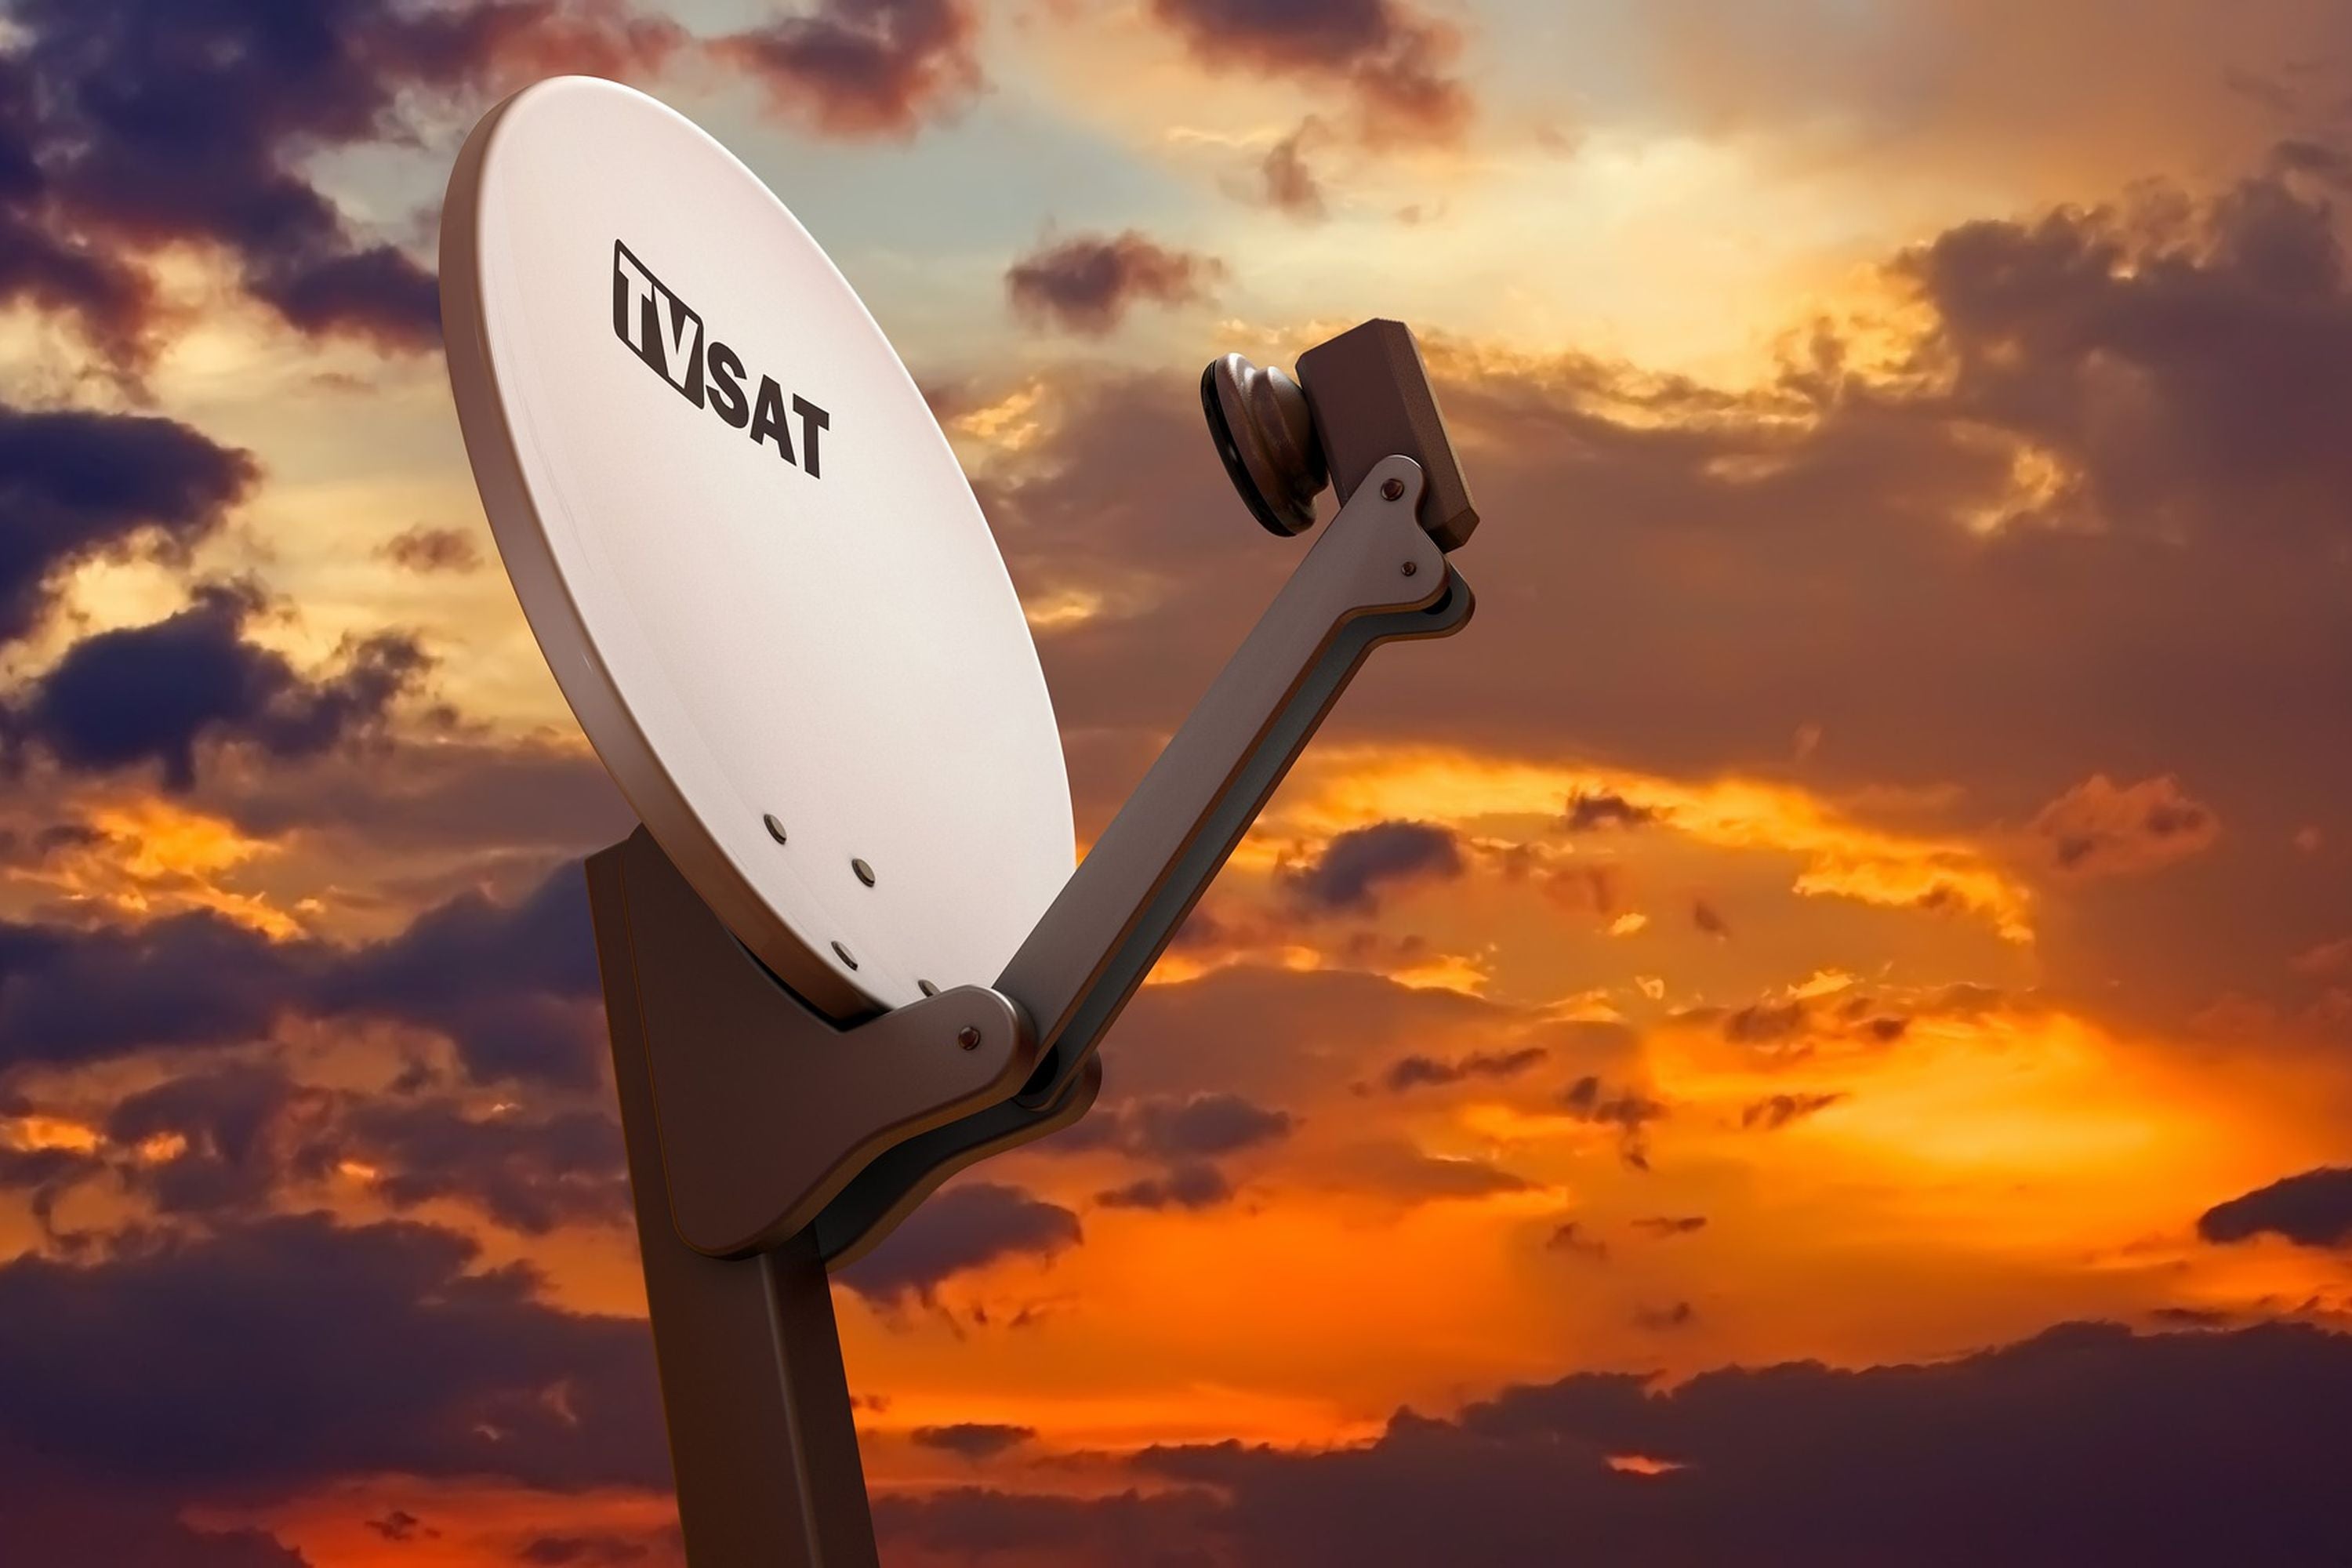 #Astra: Vier neue Free-TV-Sender per Satellit